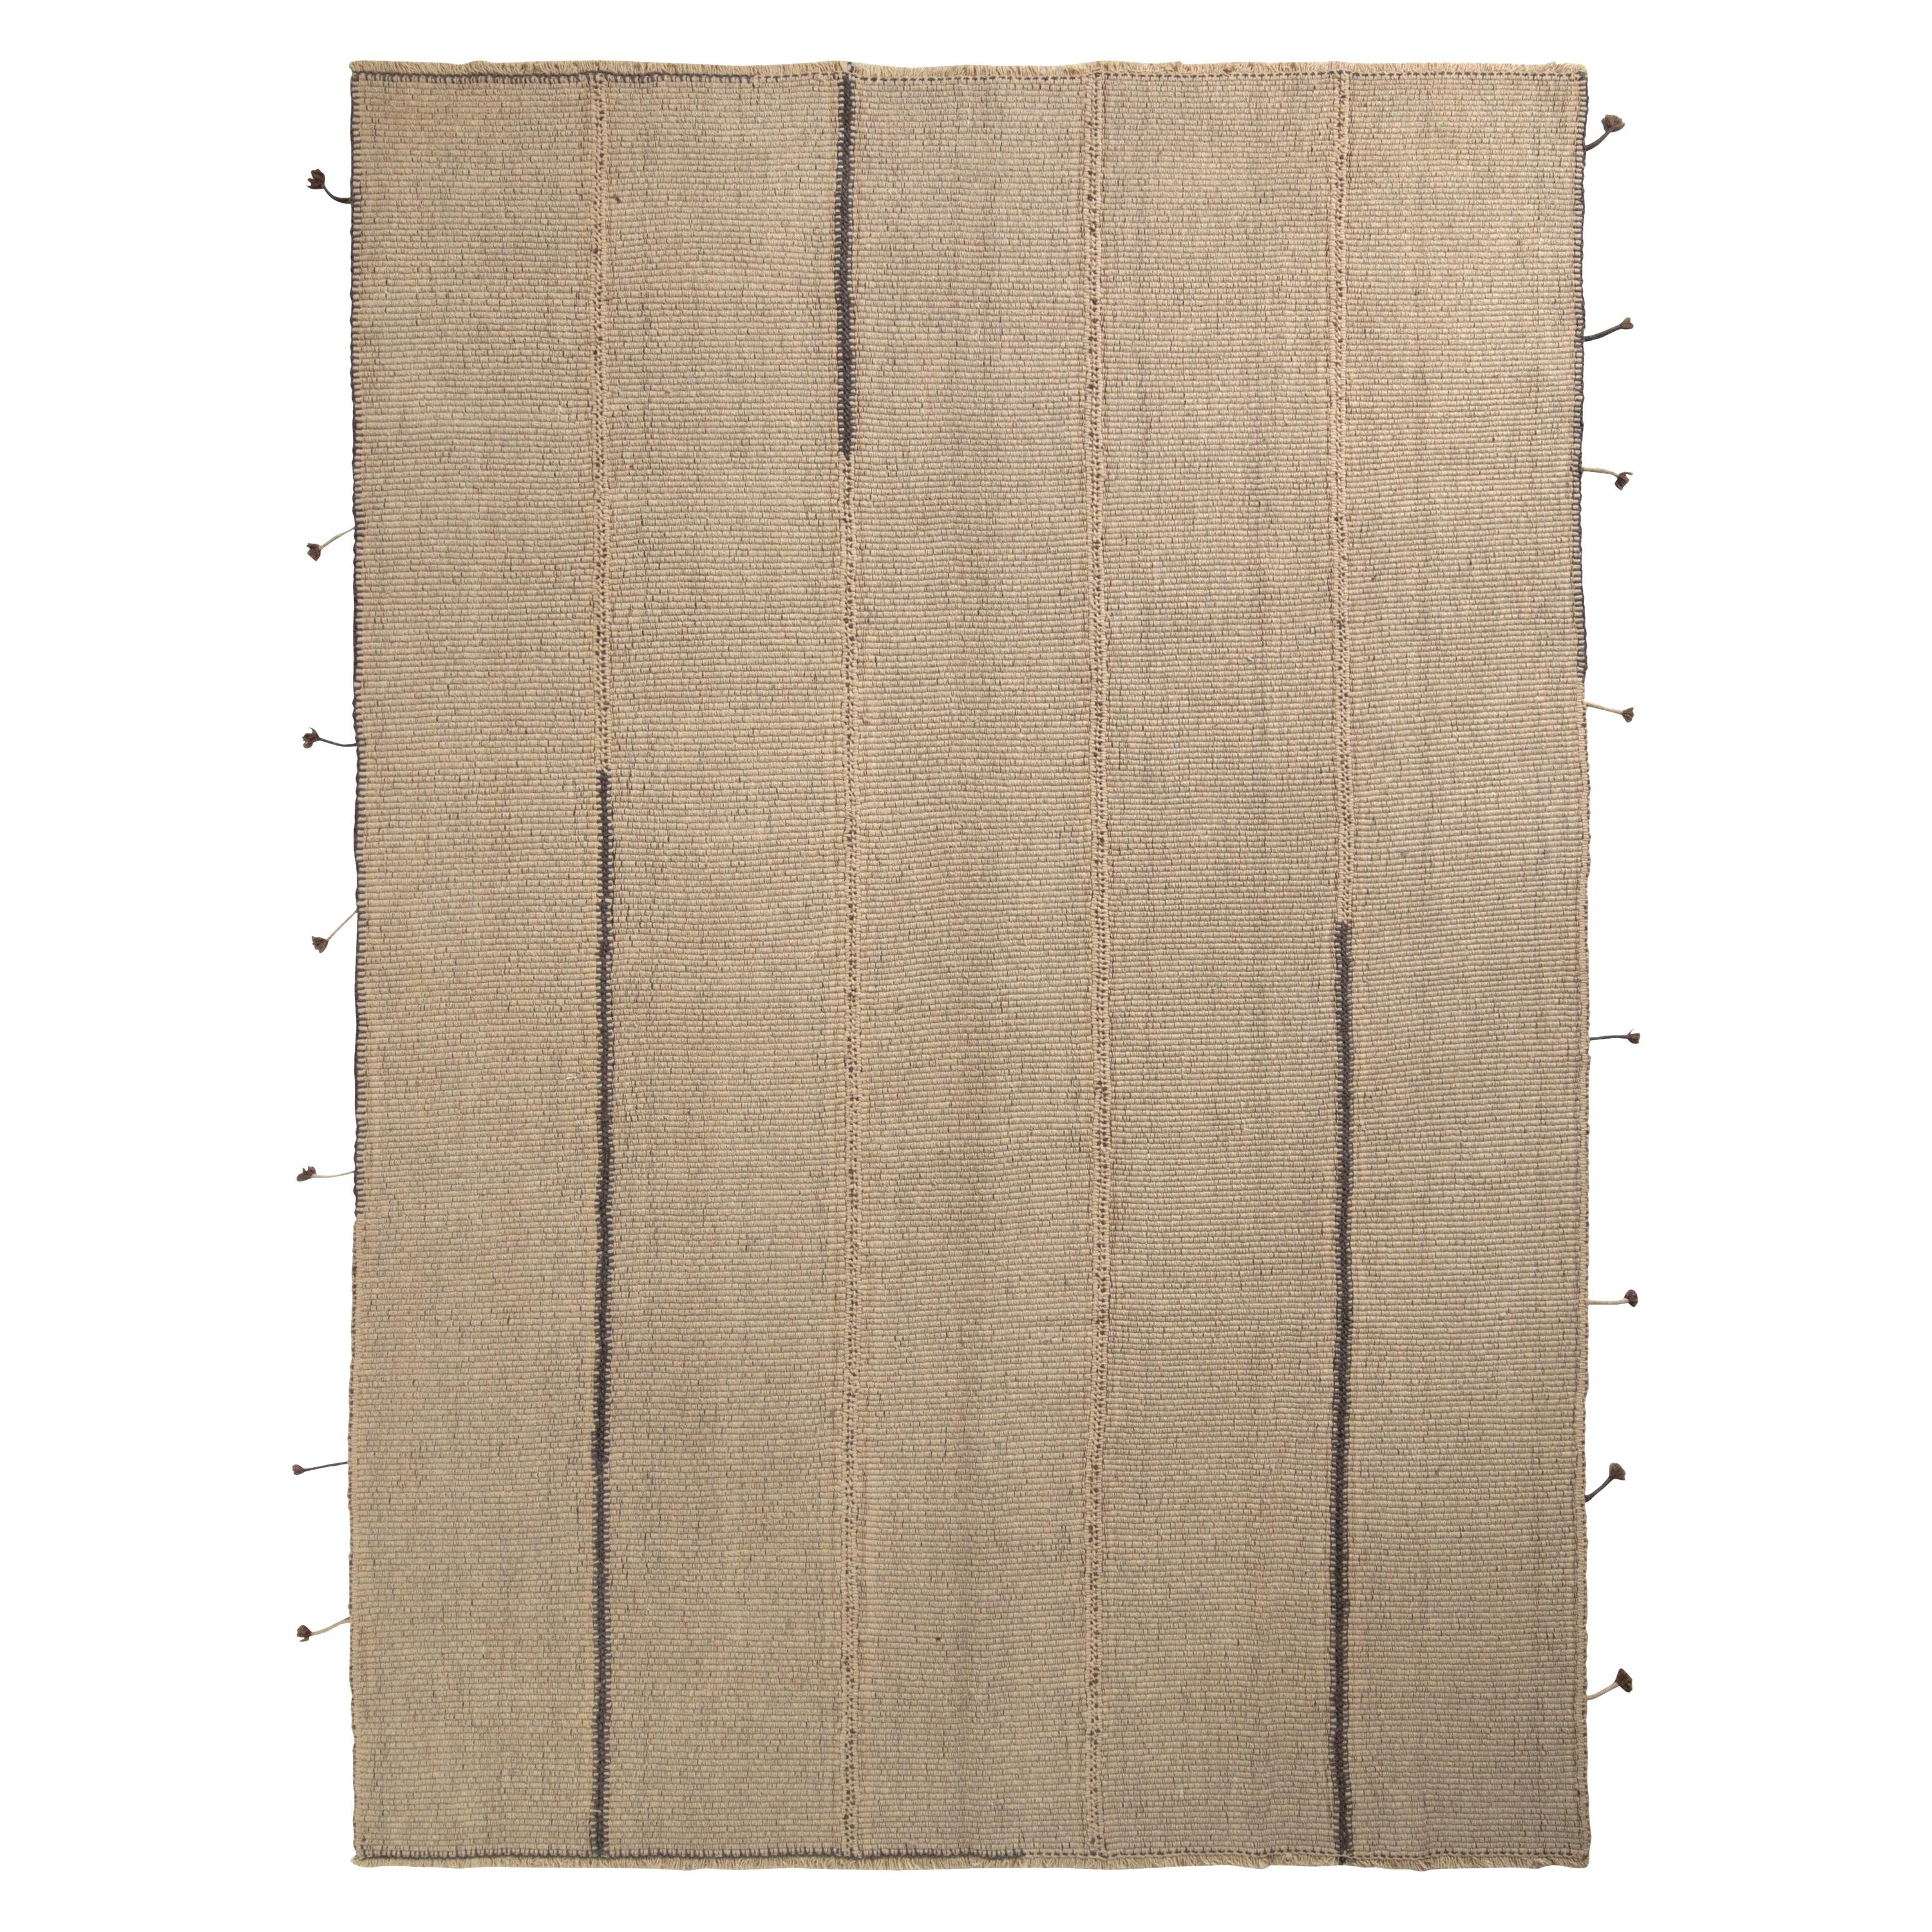 Rug & Kilim’s Modern Custom Kilim in Beige-Brown, Black Striped Pattern